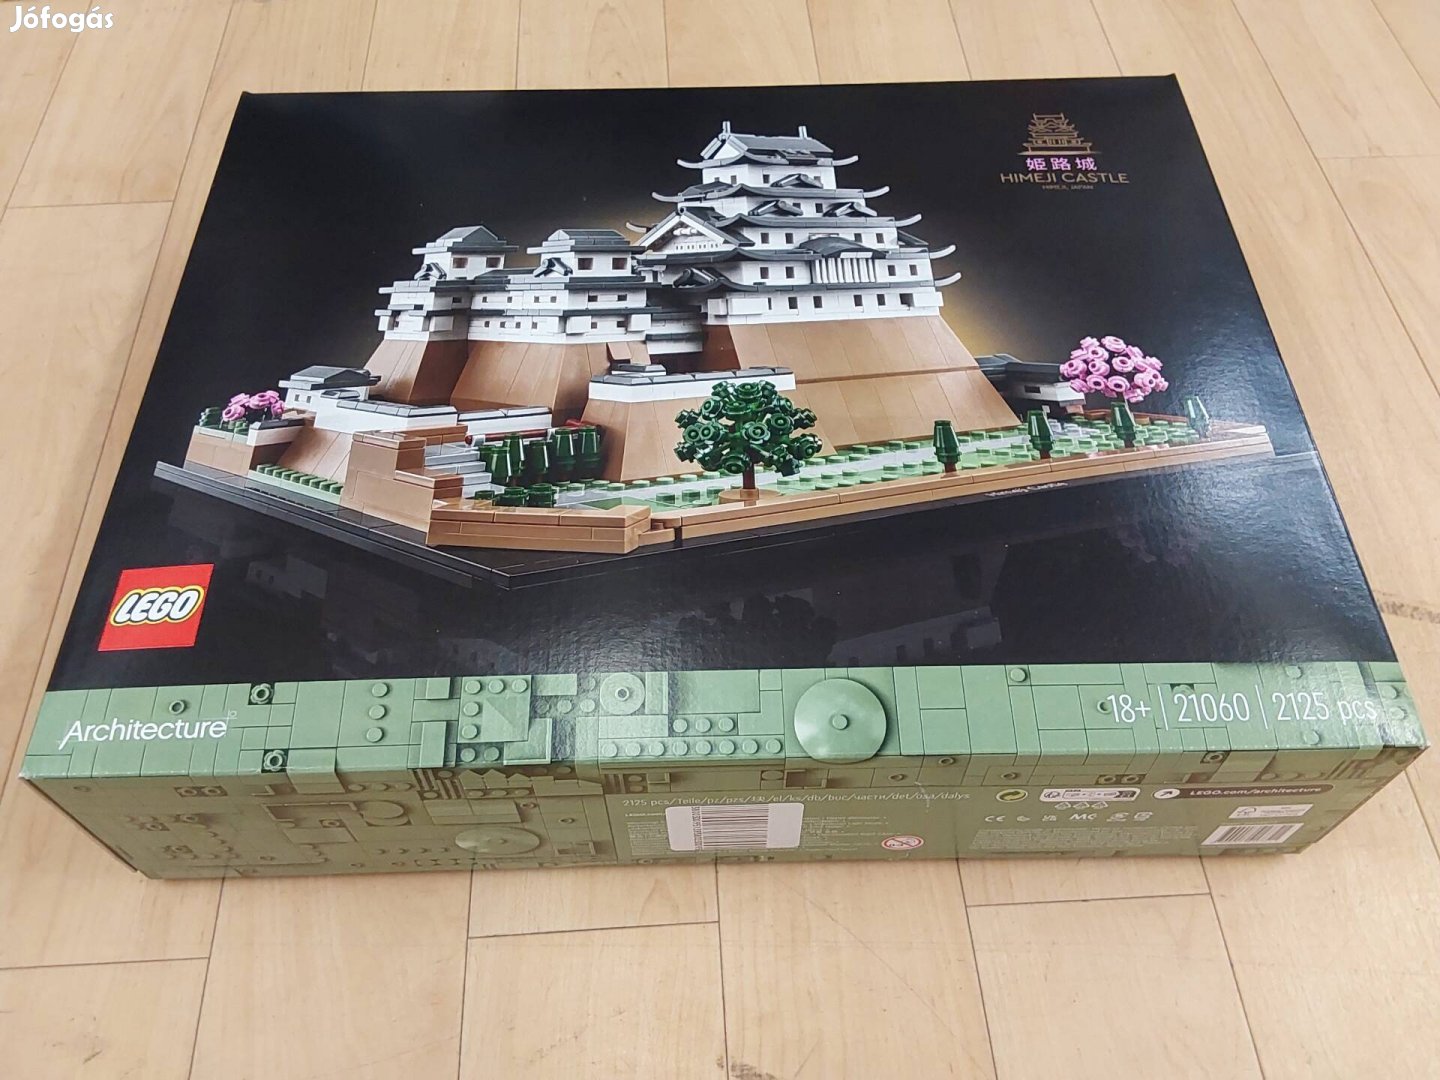 Lego 21060 Himeji